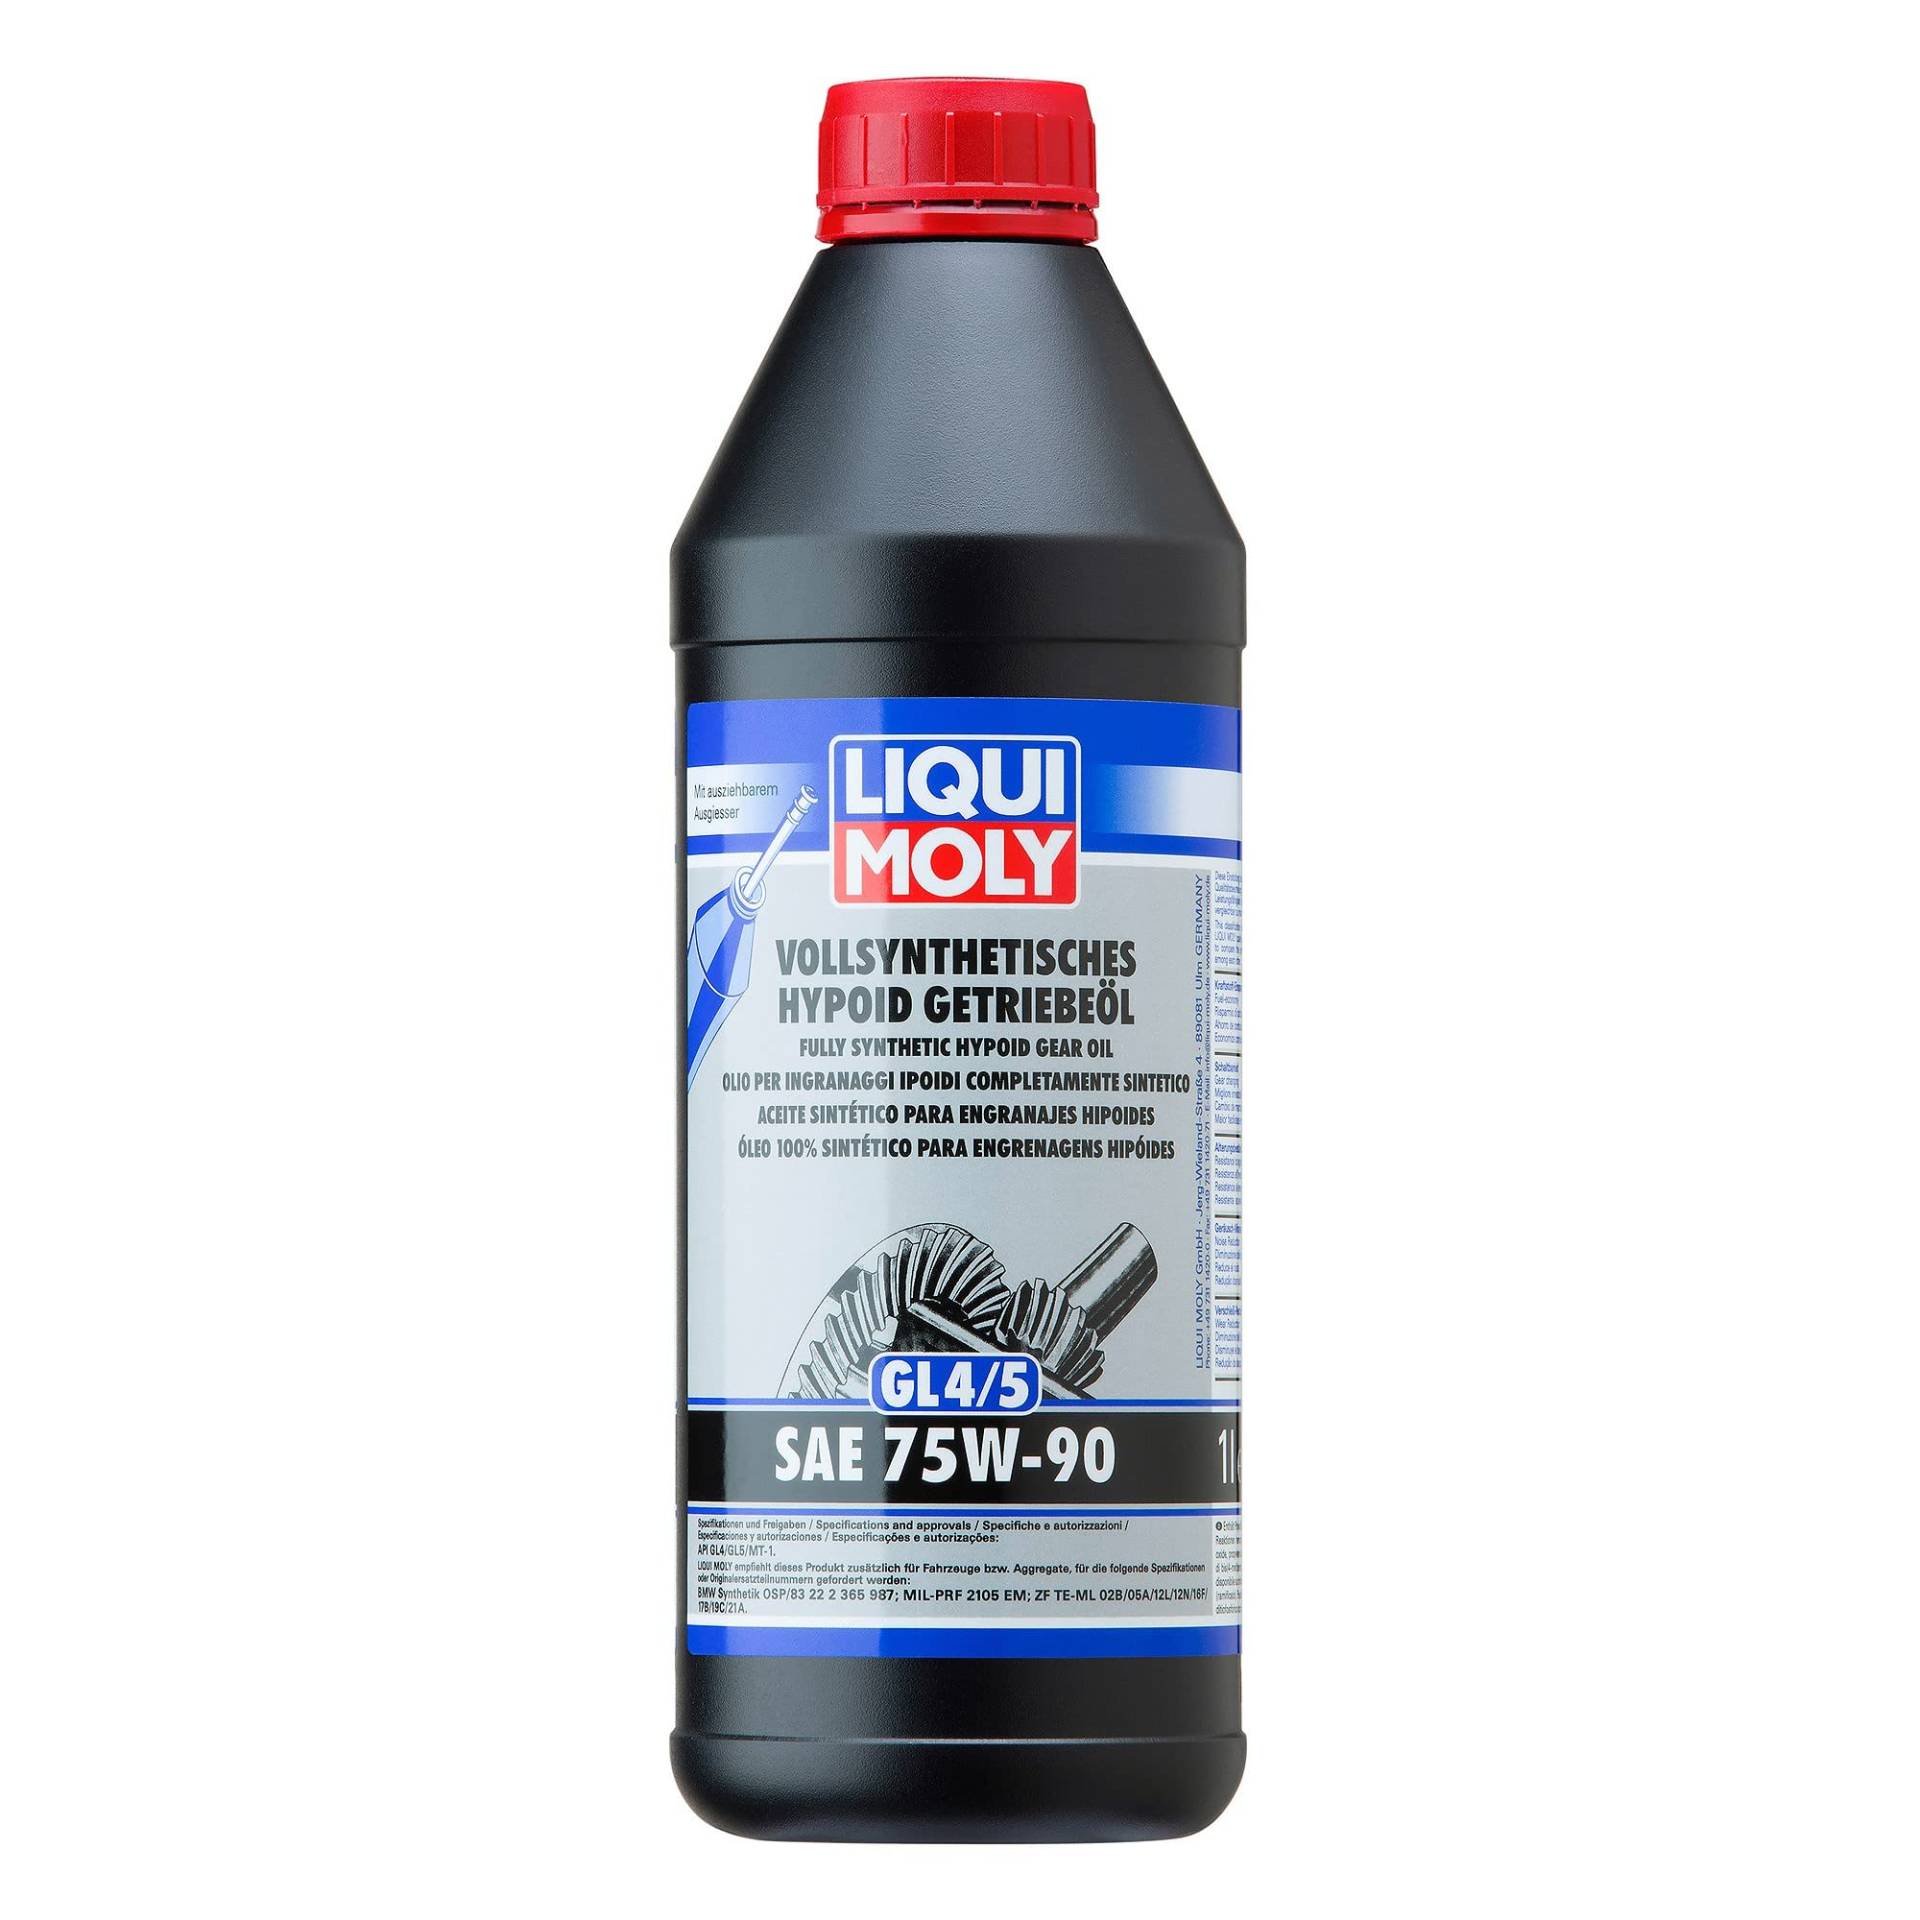 LIQUI MOLY Vollsynthetisches Hypoid Getriebeöl (GL4/5) 75W-90 | 1 L | Getriebeöl | Hydrauliköl | Art.-Nr.: 1024 von Liqui Moly